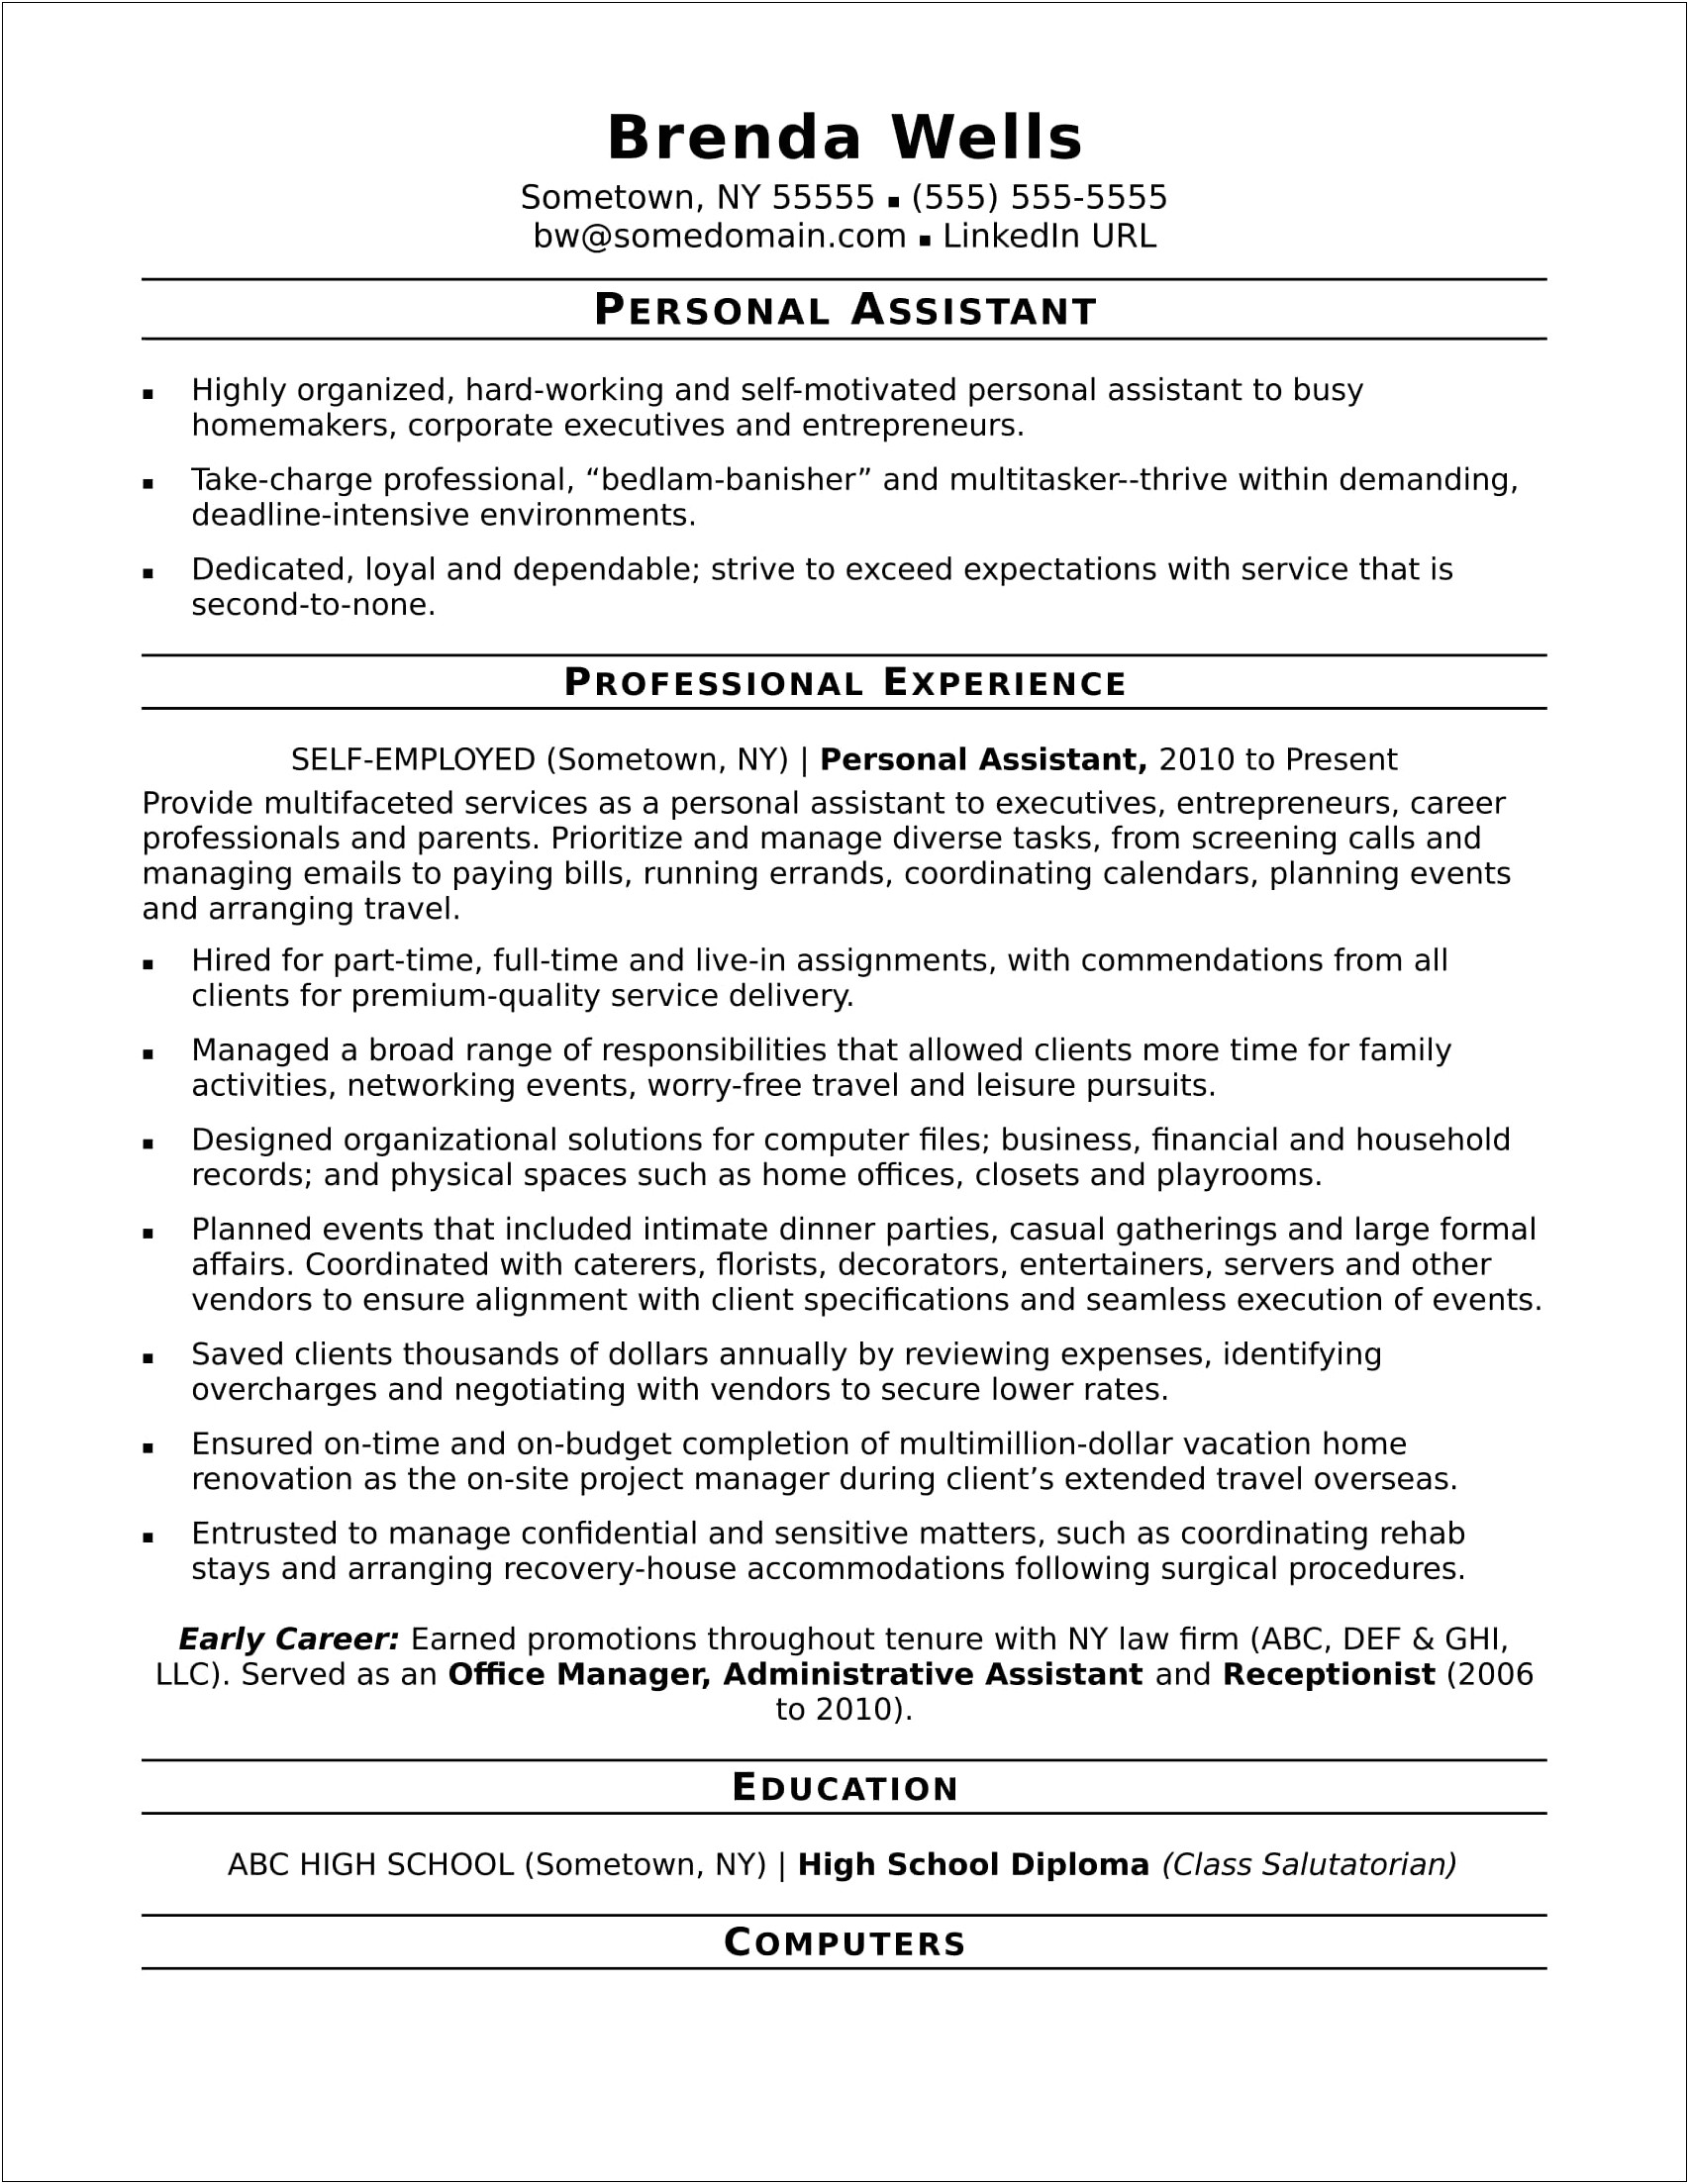 Resume Summary Executive Assistant Skills